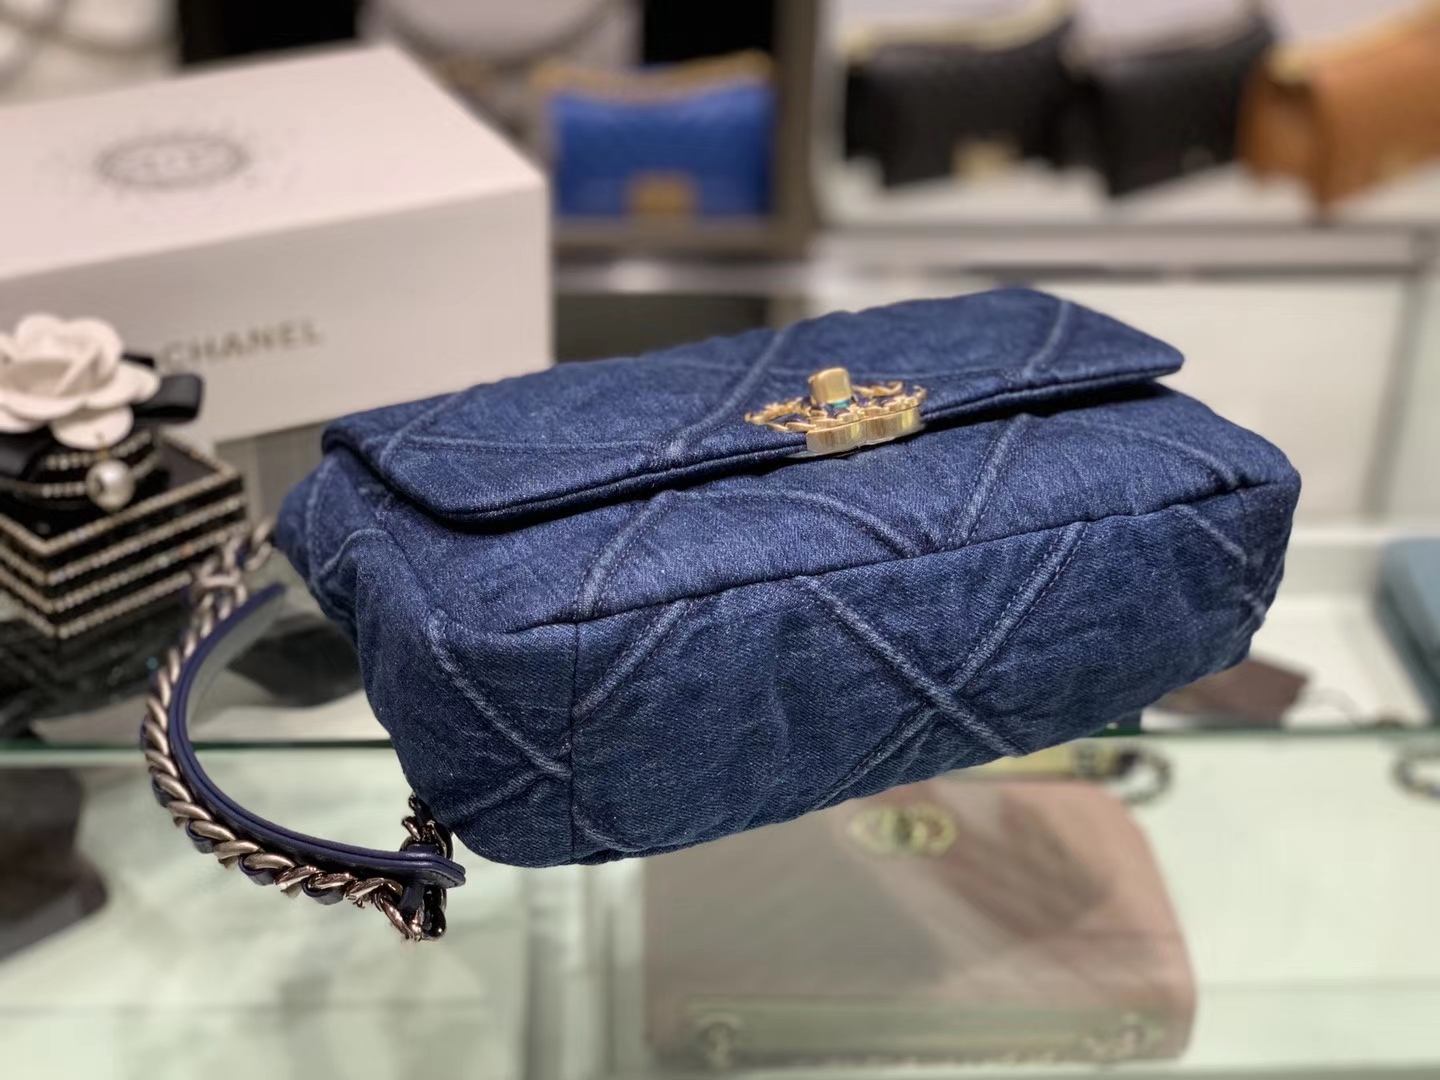 Chanel（香奈儿）𝟮𝟬𝟮𝟬 𝖈𝖍𝖆𝖓𝖊𝖑 19 手袋 超美的牛仔蓝